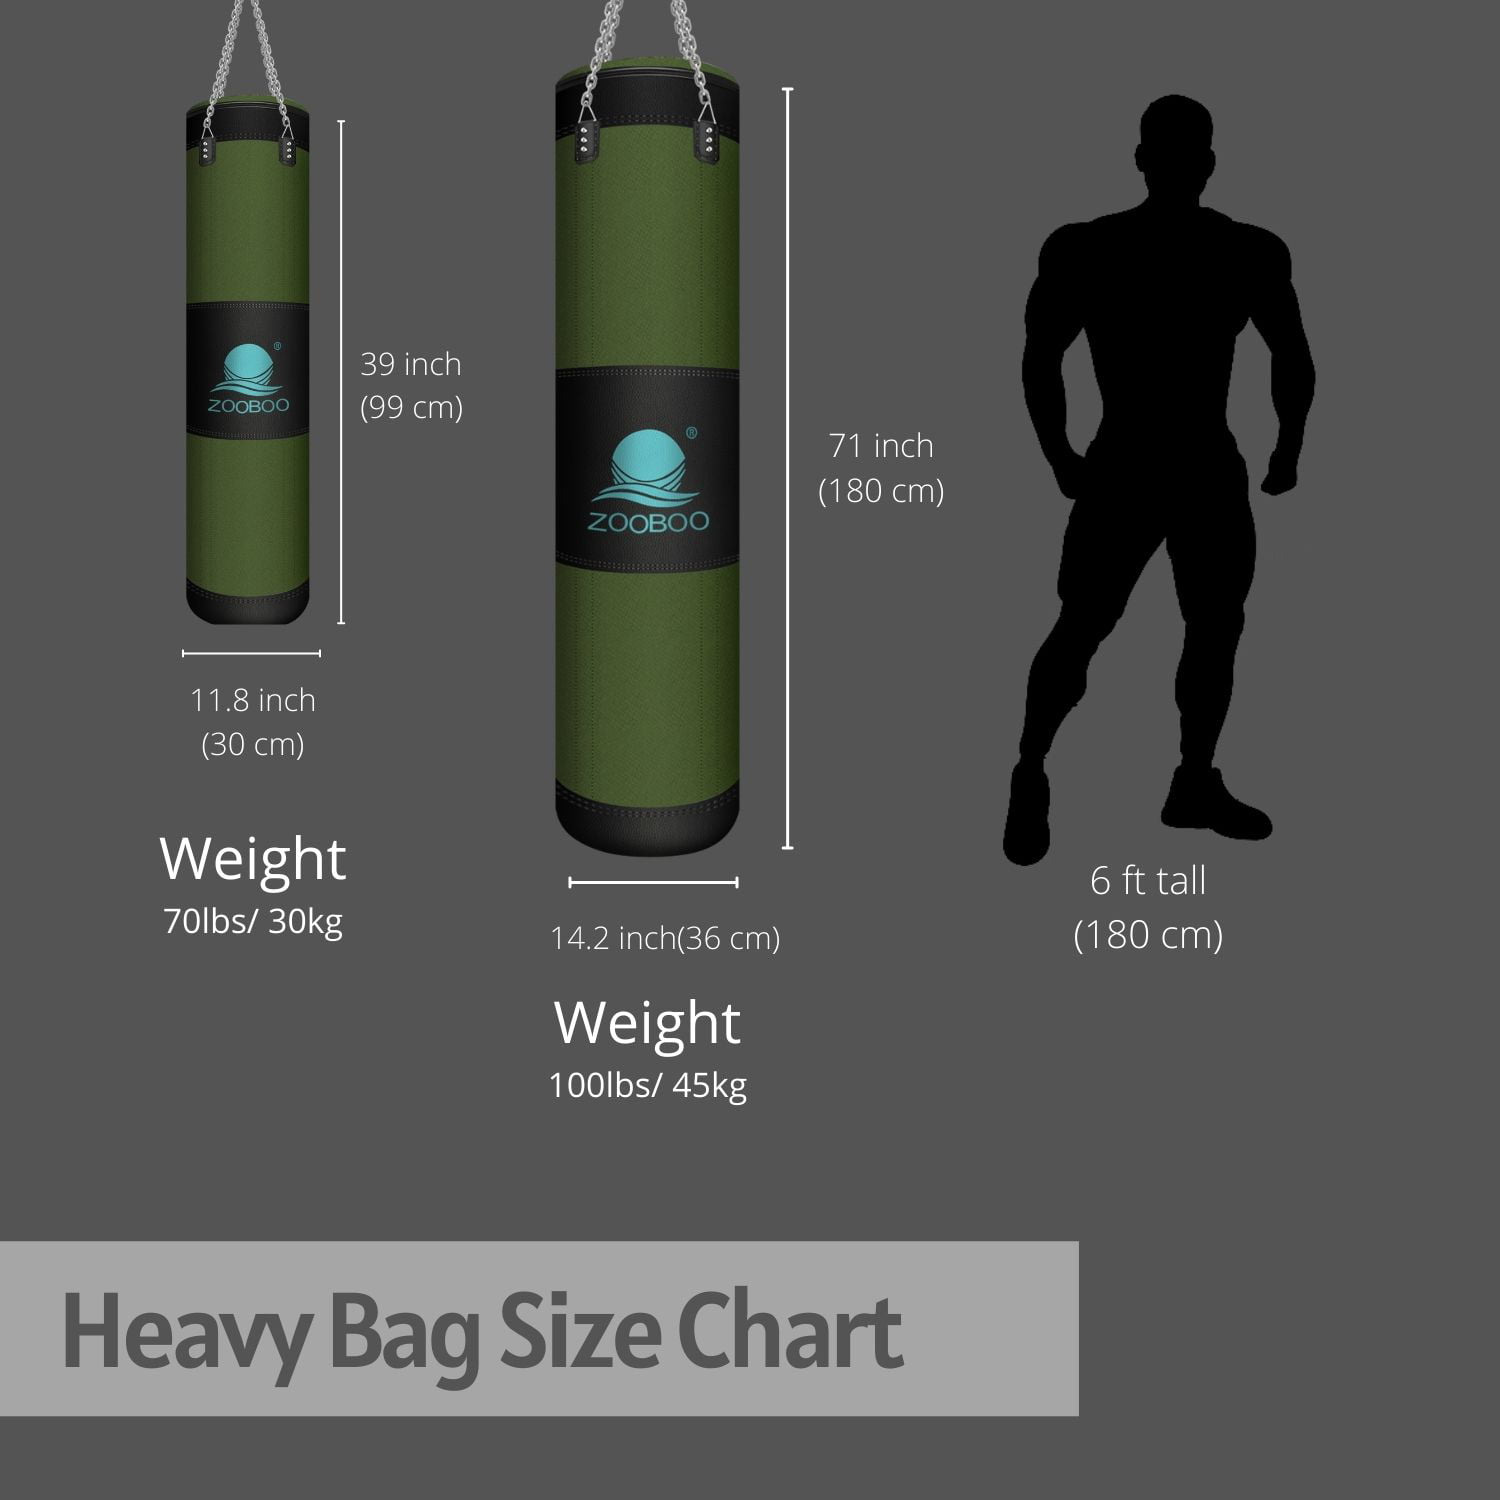 39" Training Fitness MMA Boxing Heavy Sand Punching Bag Training Sandbag Empty